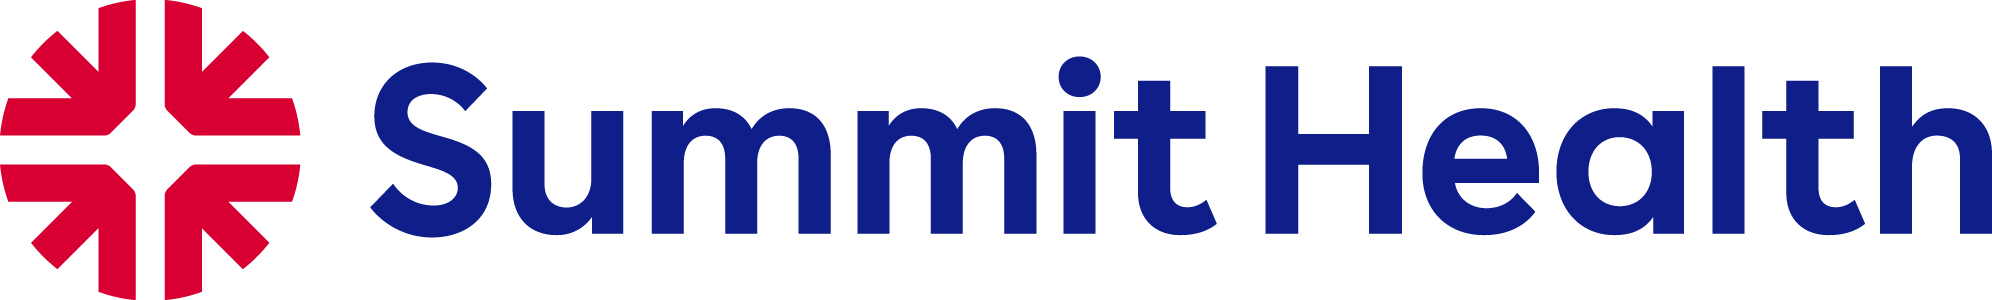 Summit Health logo